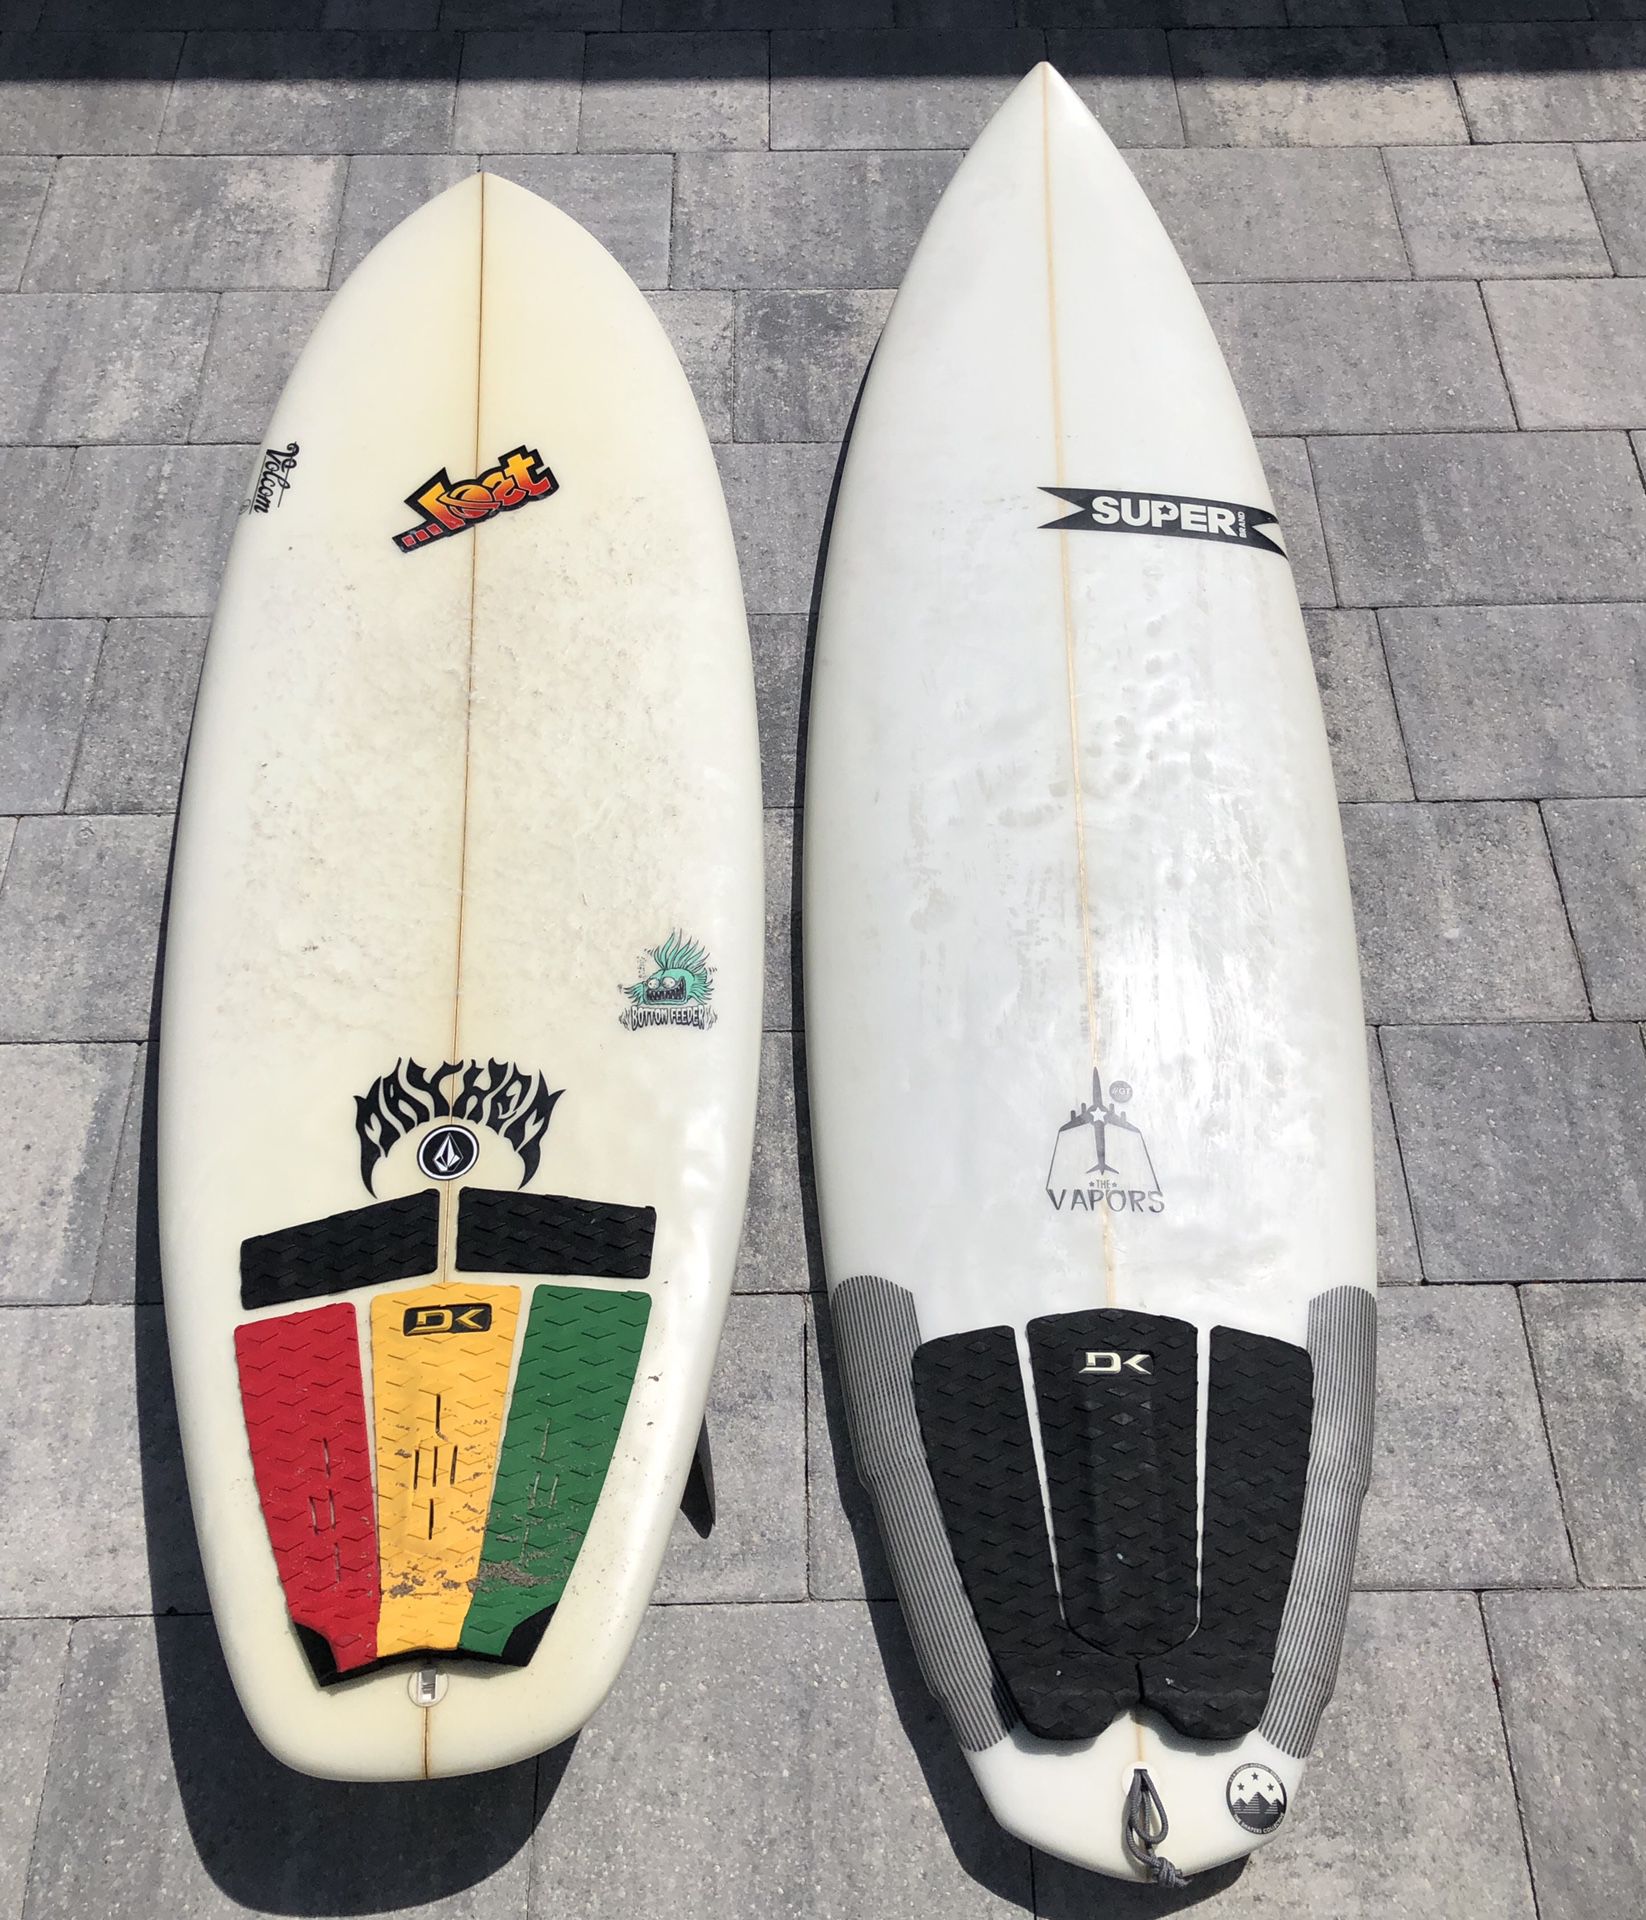 Lost Bottom Feeder & Super Vapors Surfboard Package